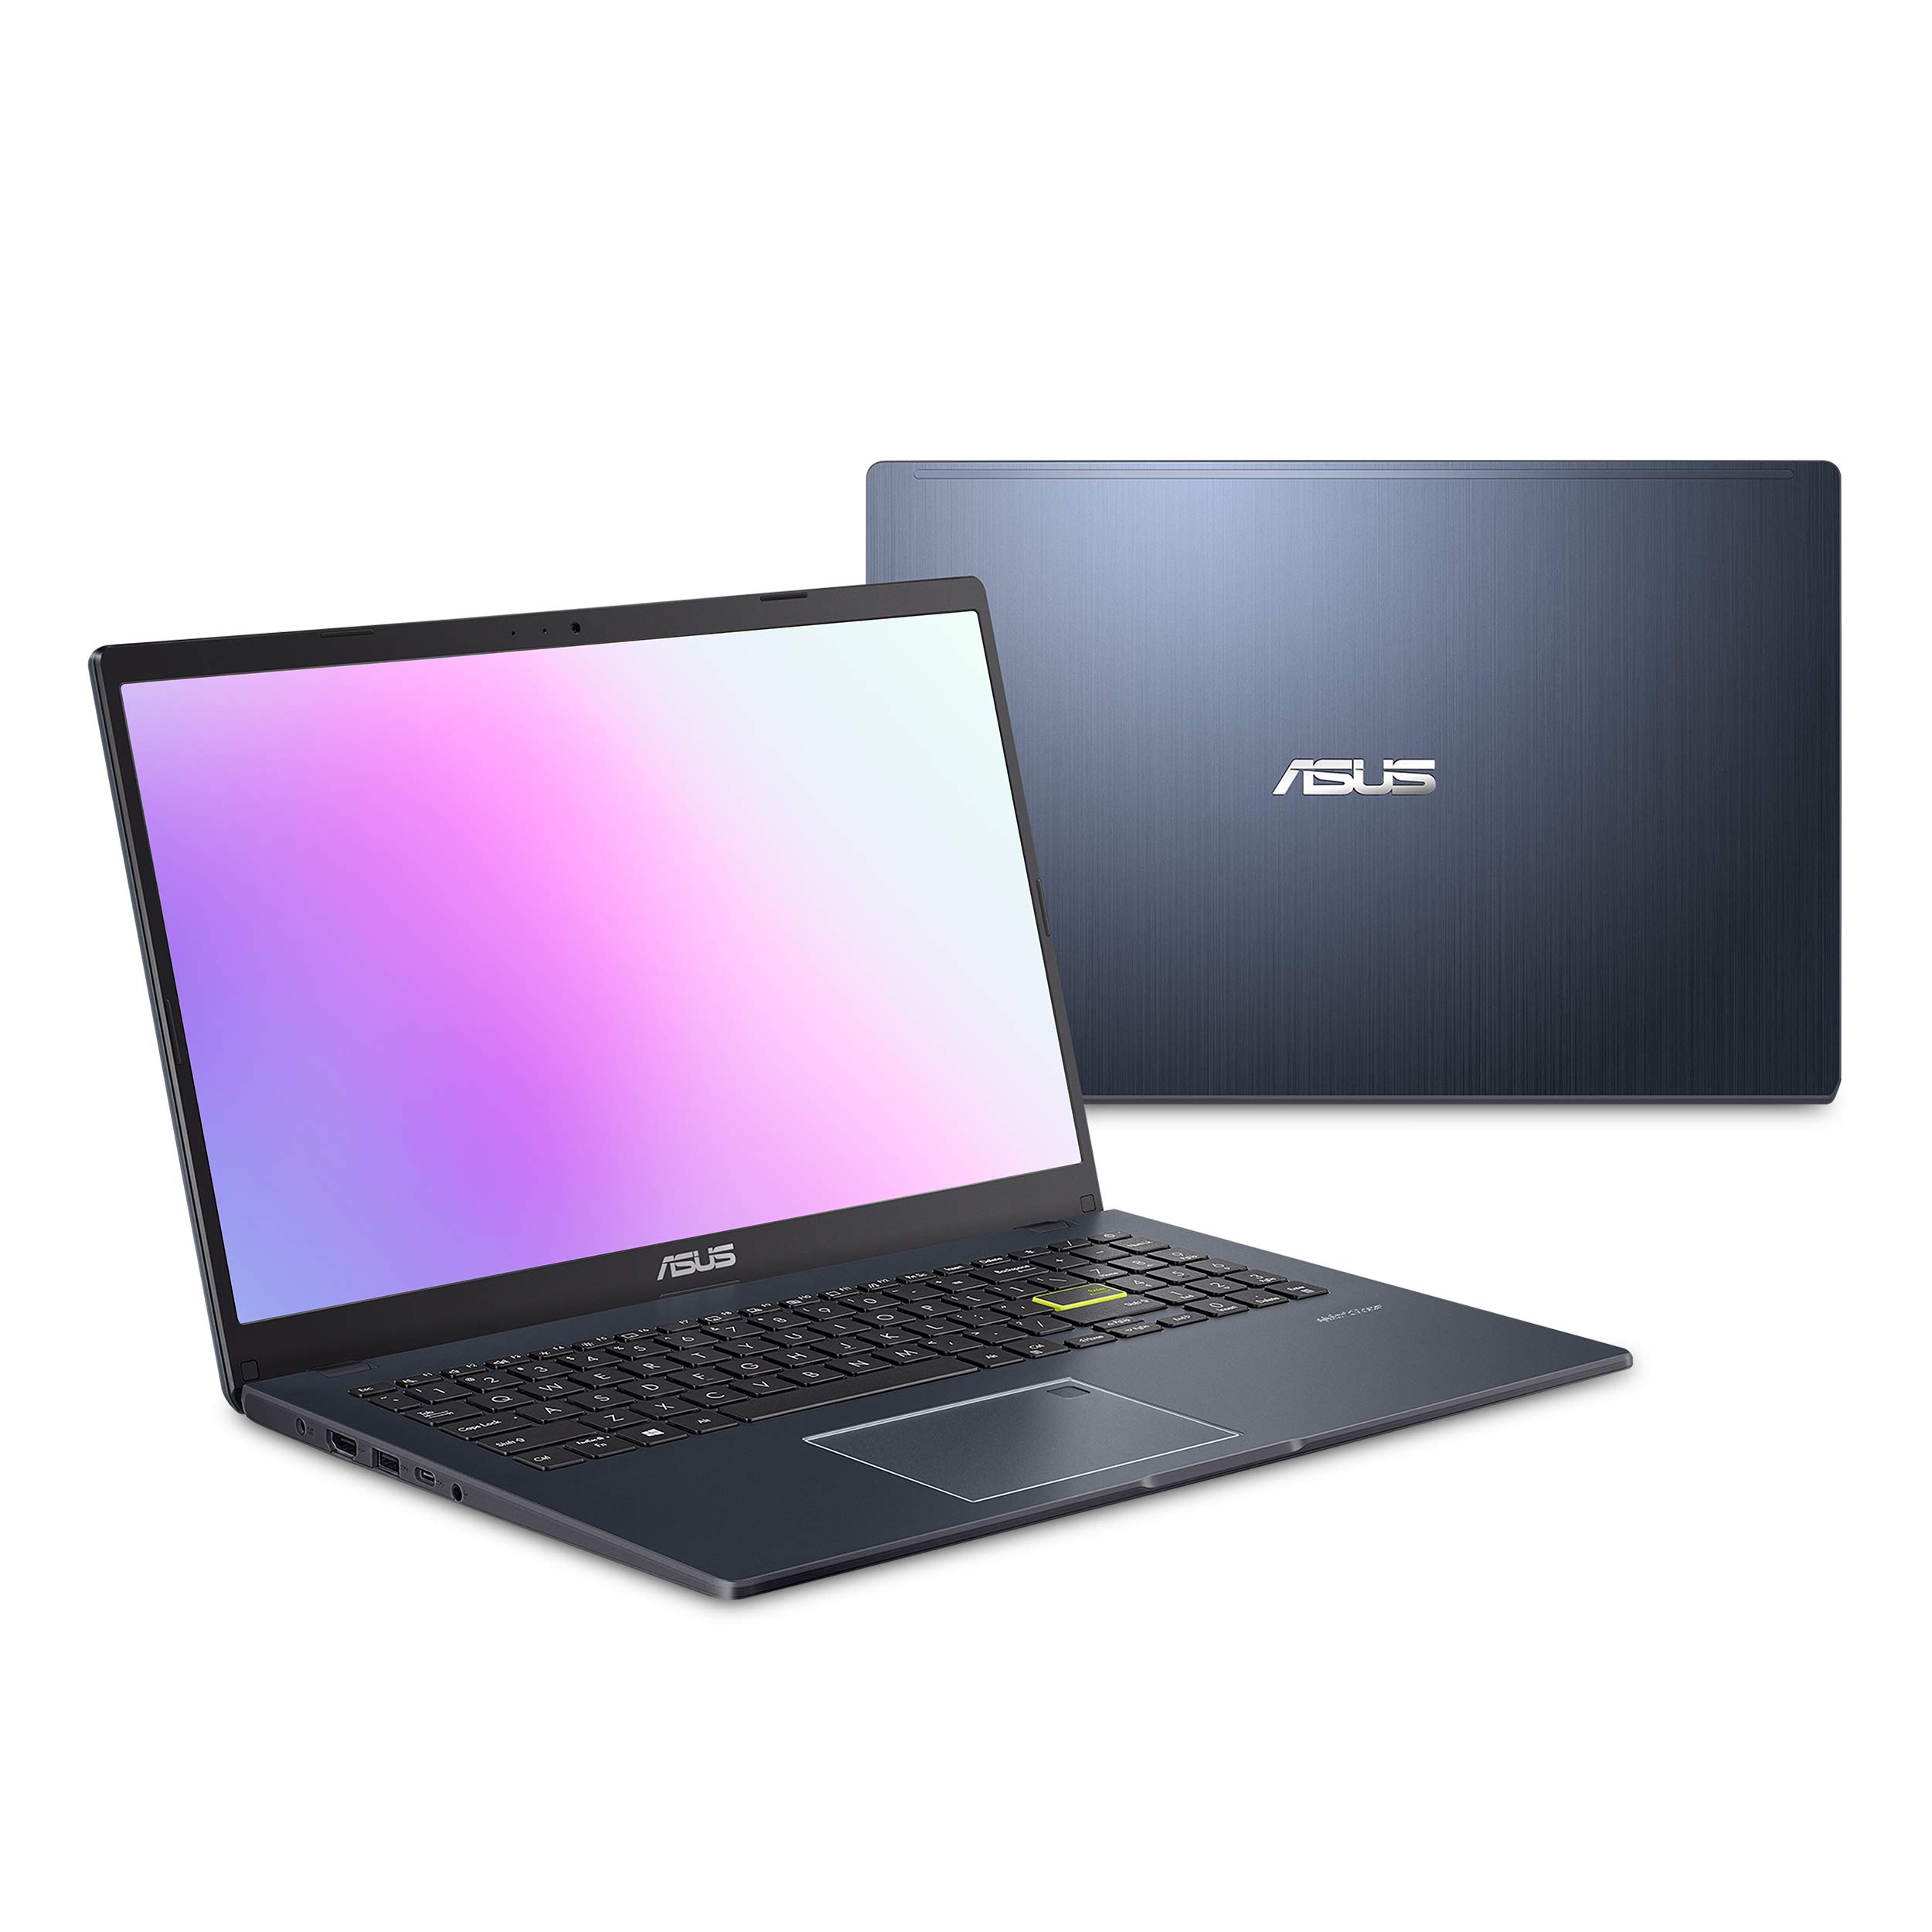 Mua ASUS Laptop L510 Ultra Thin Laptop, 15.6” FHD Display, Intel Celeron  N4020 Processor, 4GB RAM, 128GB Storage, Windows 10 Home in S Mode, Year  Microsoft 365, Star Black, L510MA-DS04 trên